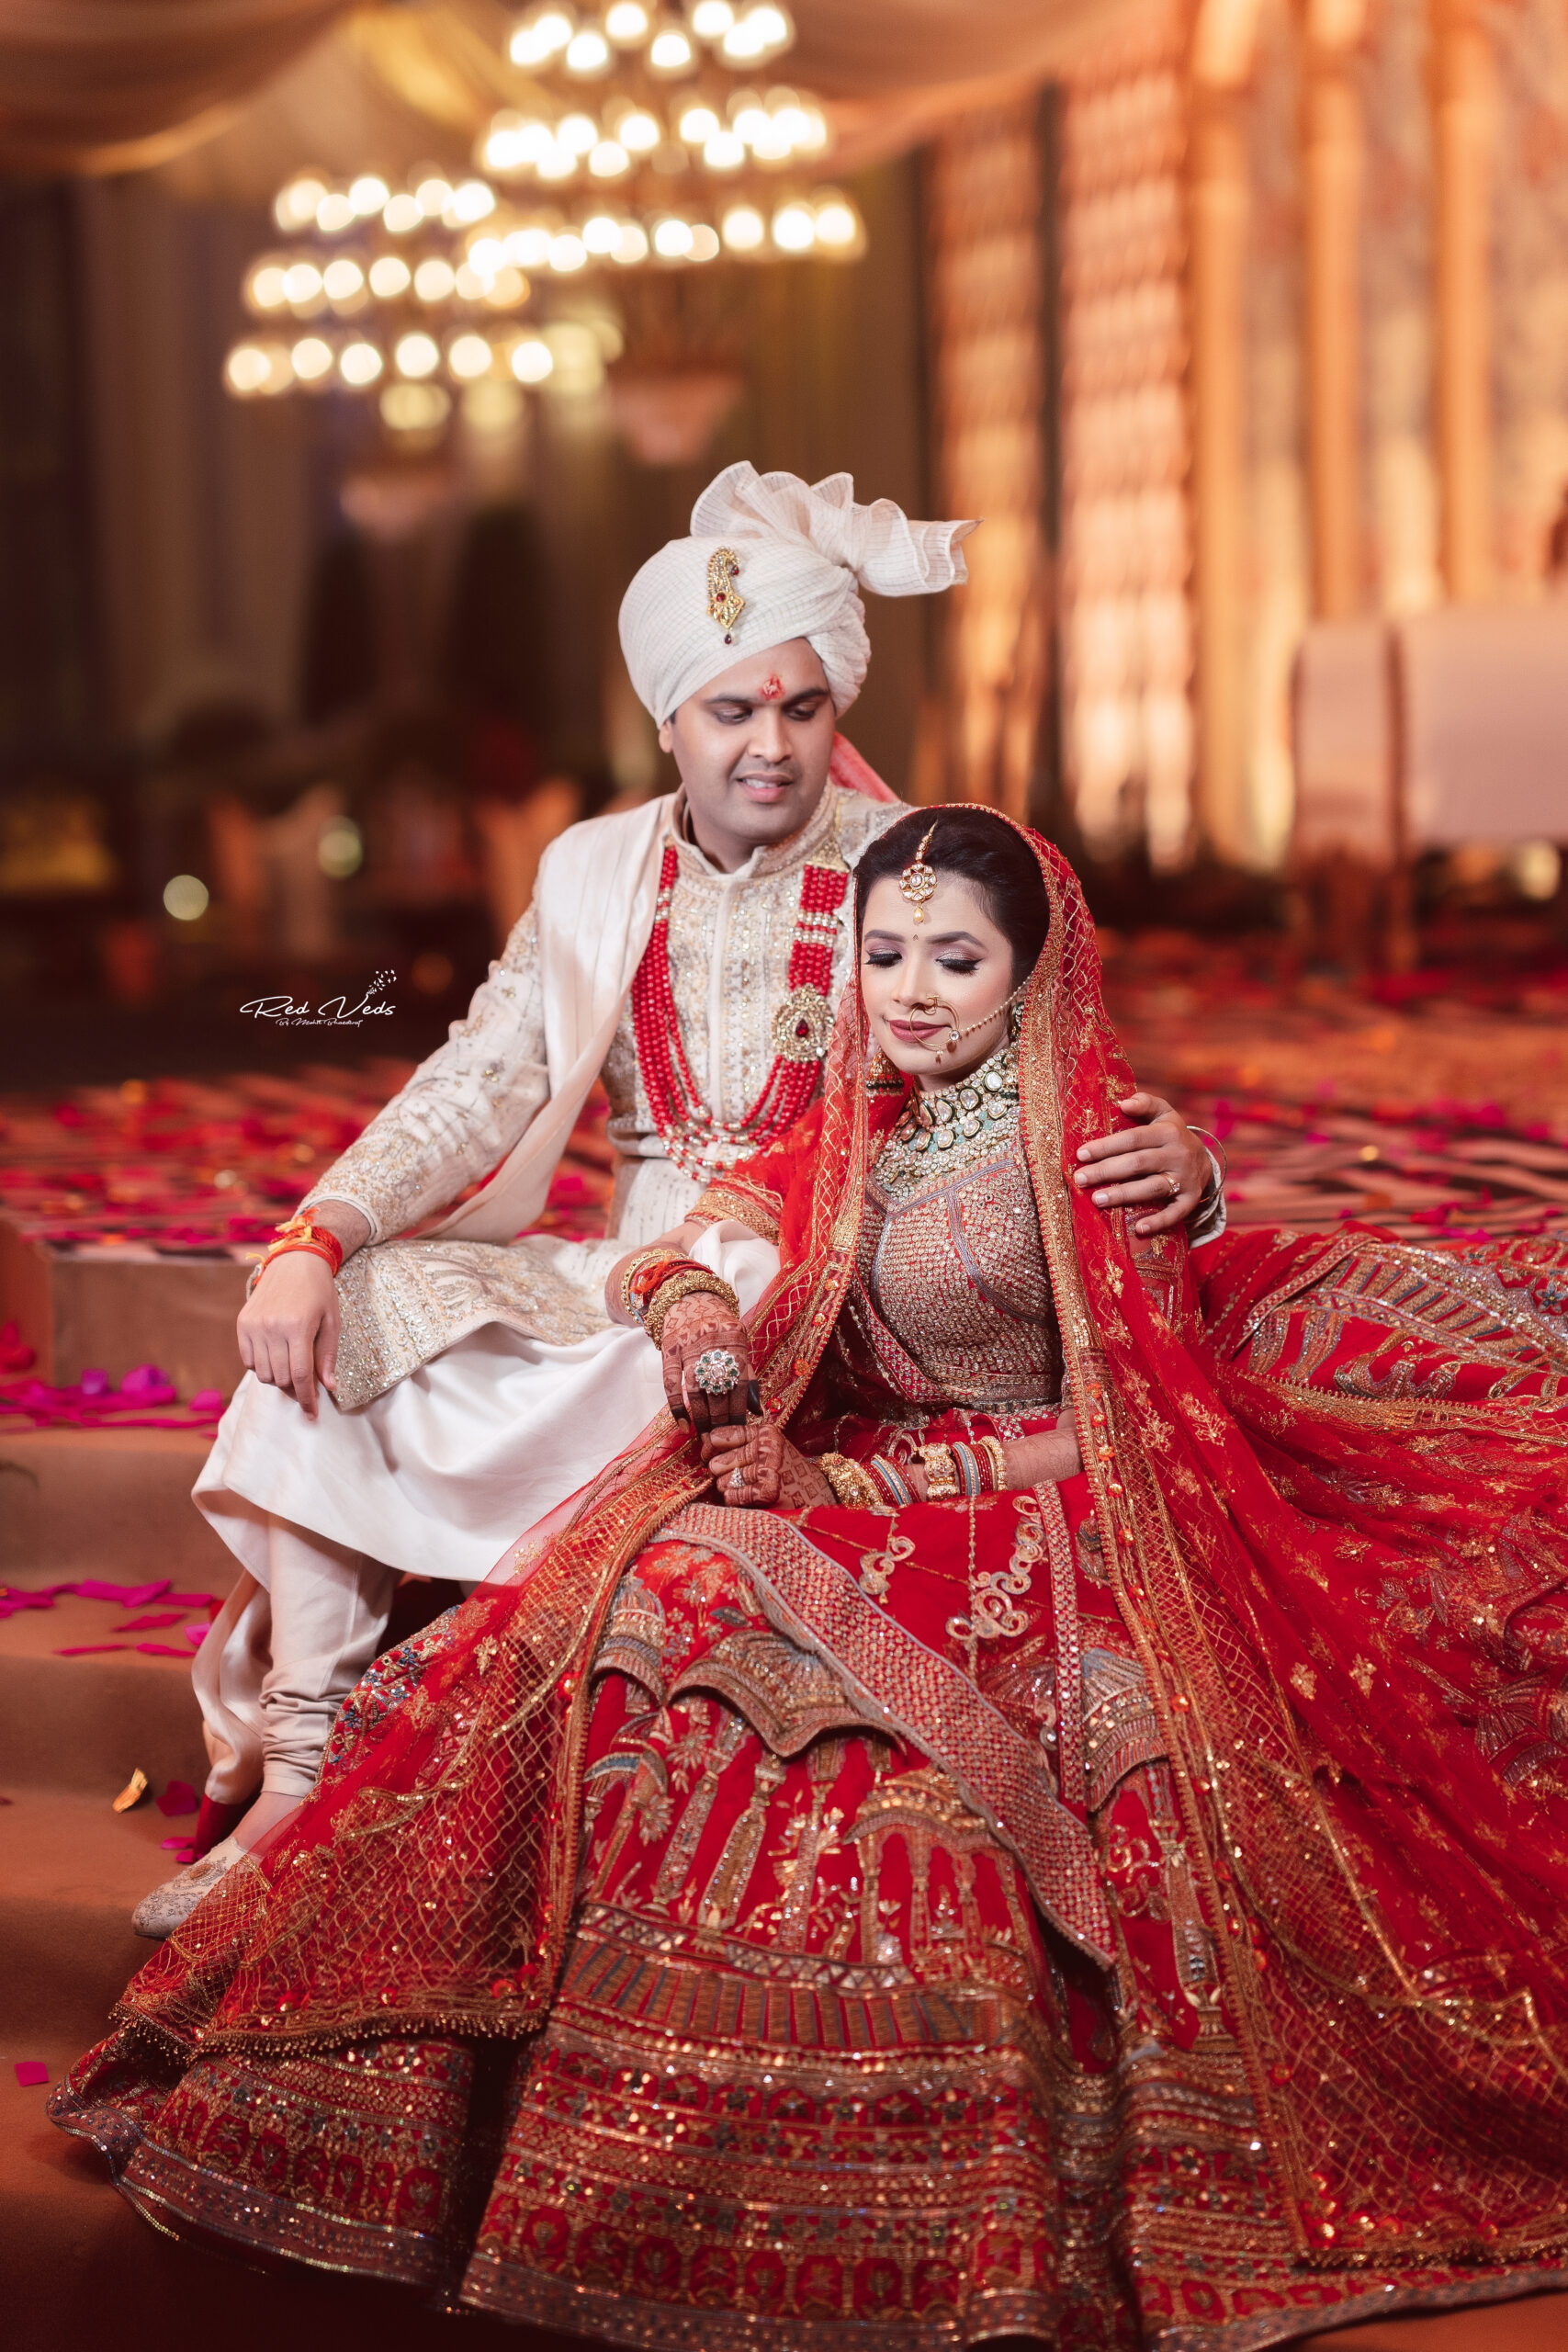 Pin by Girish Dubey on bridal closup | Couple wedding dress indian hindu,  Indian bride photography poses, Bride photos poses